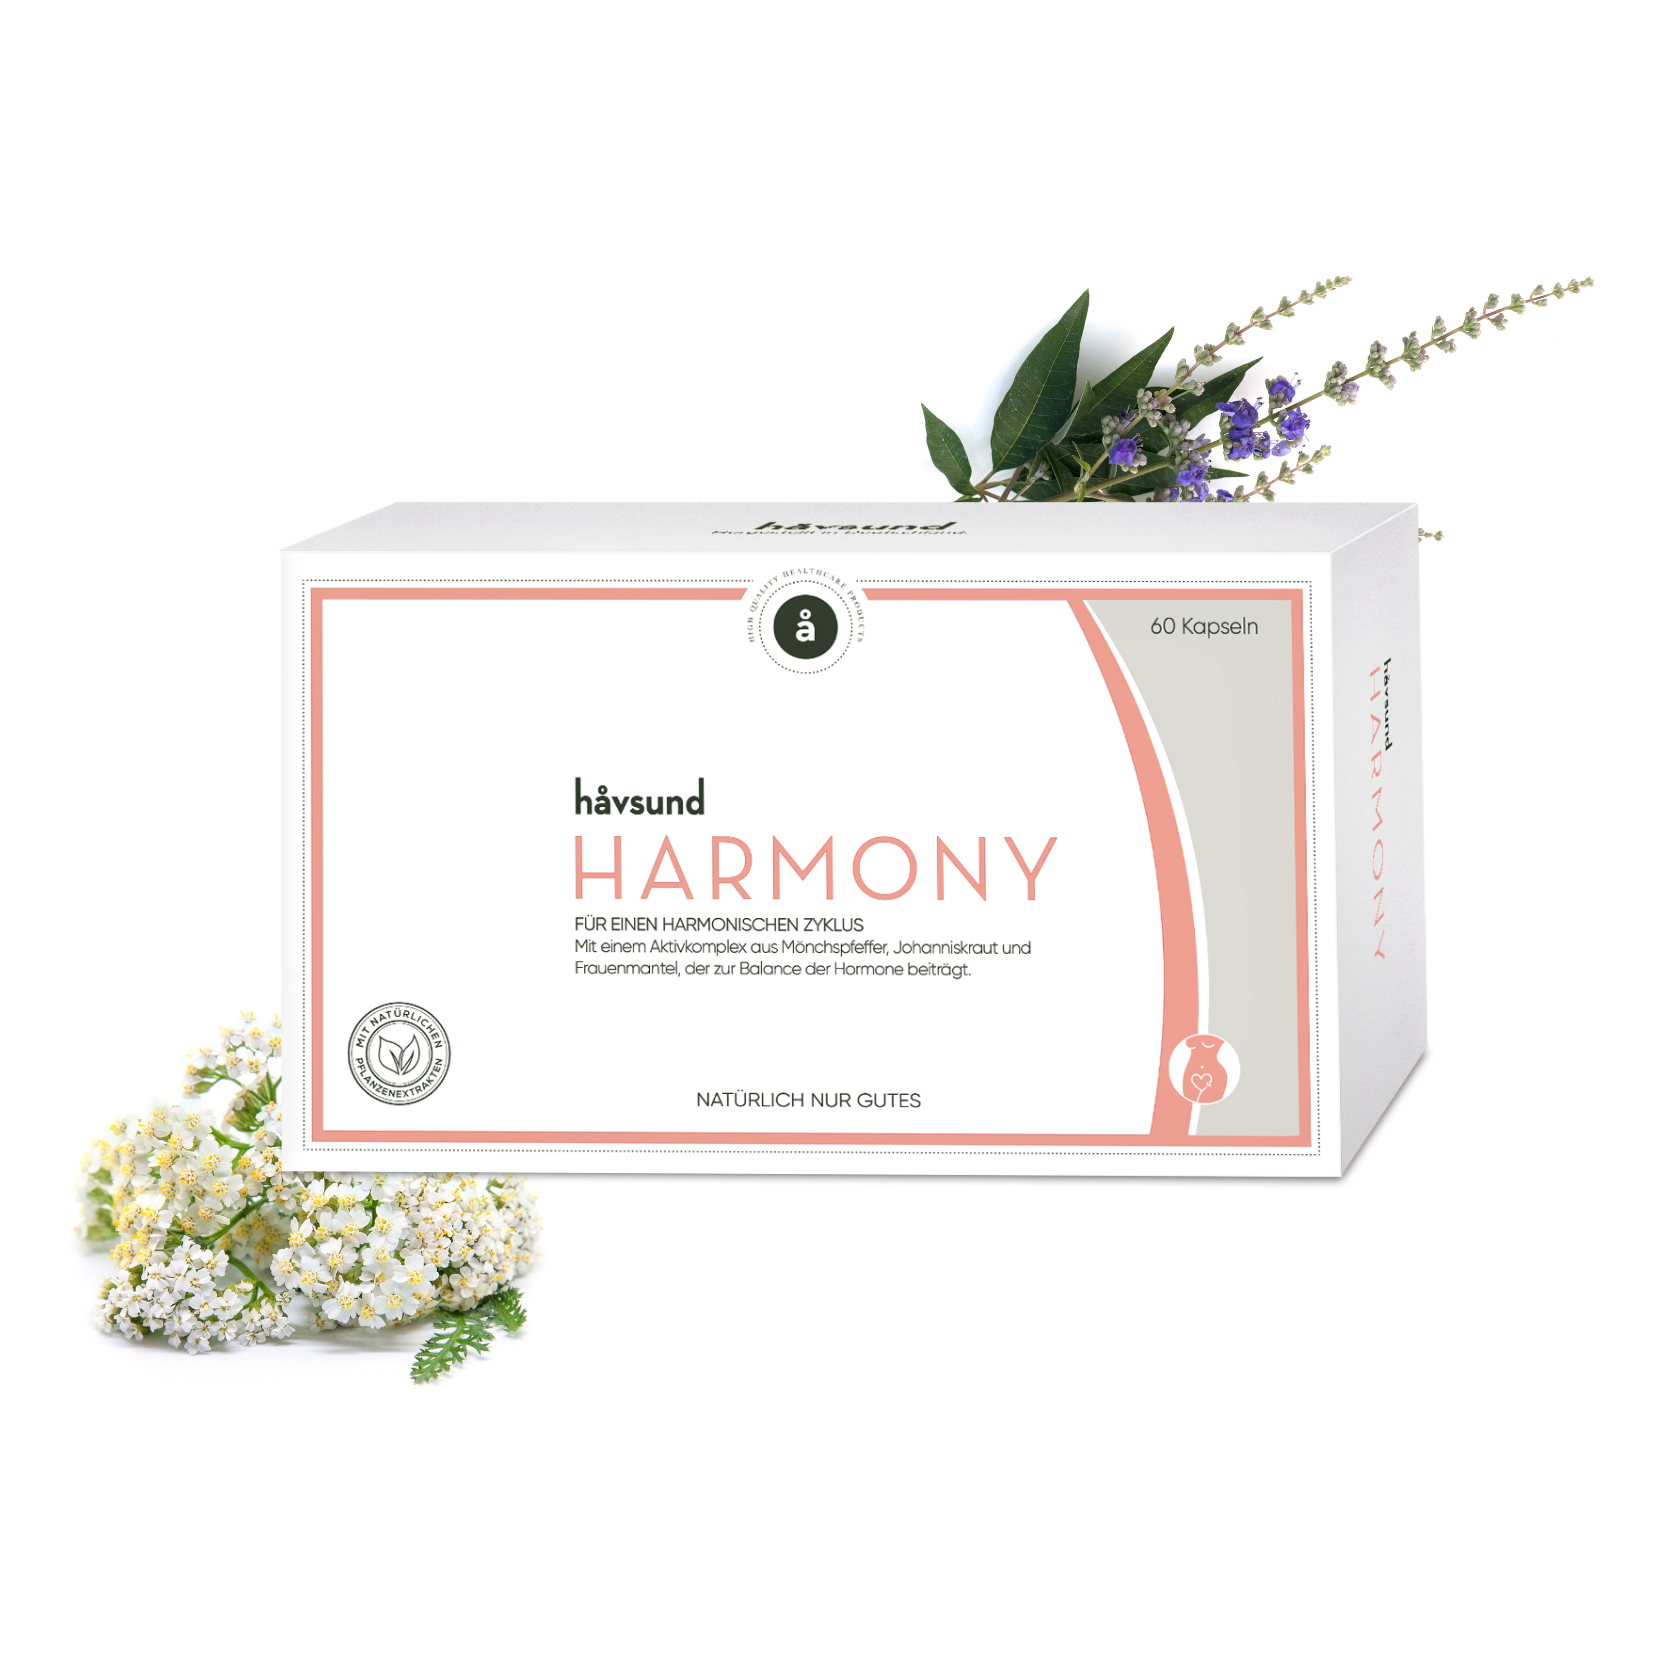 håvsund Harmony product image